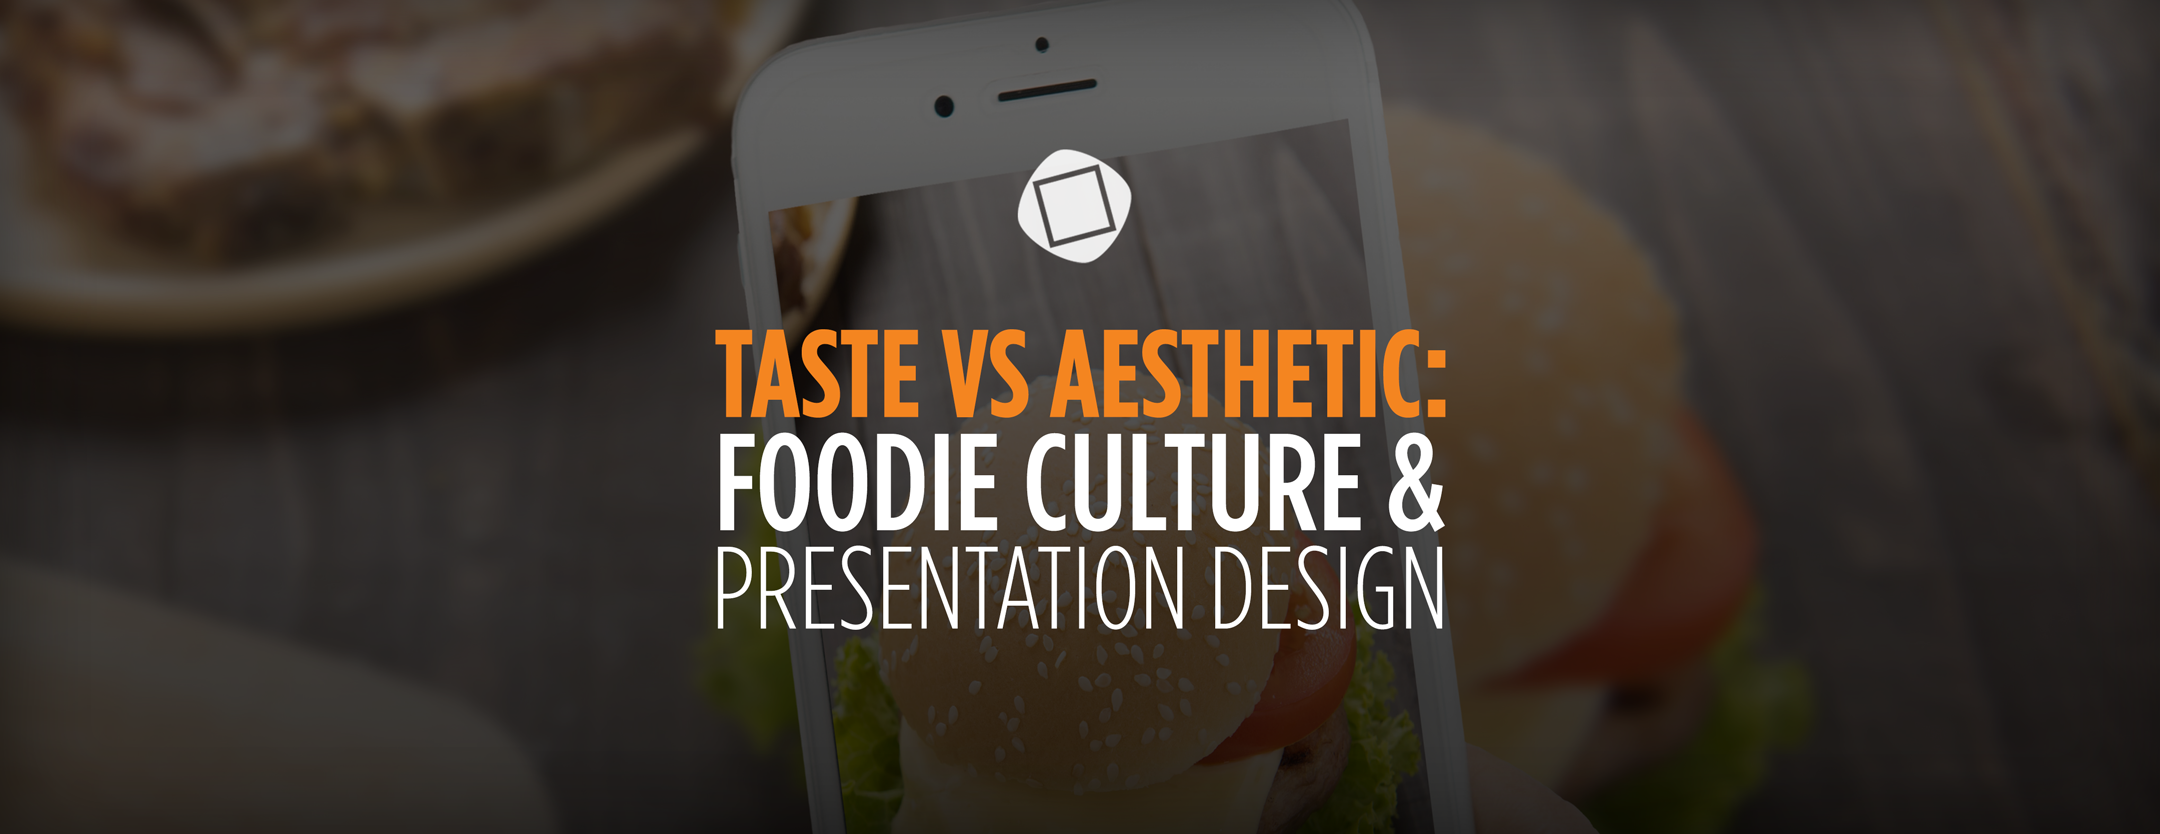 Taste vs. Aesthetic: Foodie Culture & Presentation Design